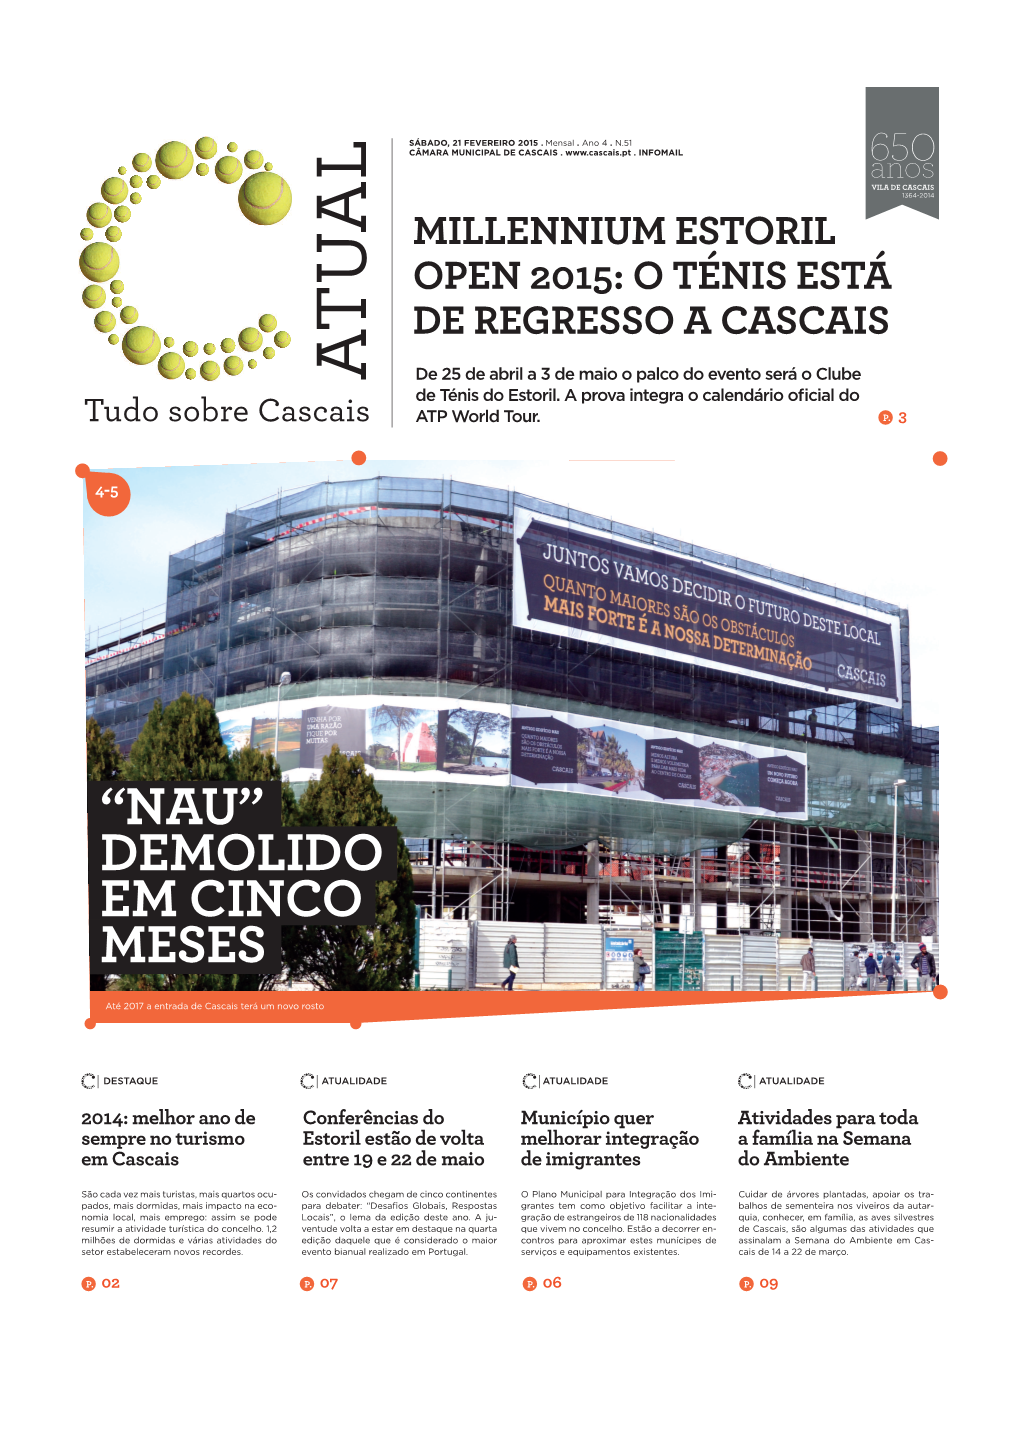 Millennium Estoril Open 2015: O Ténis Está De Regresso a Cascais